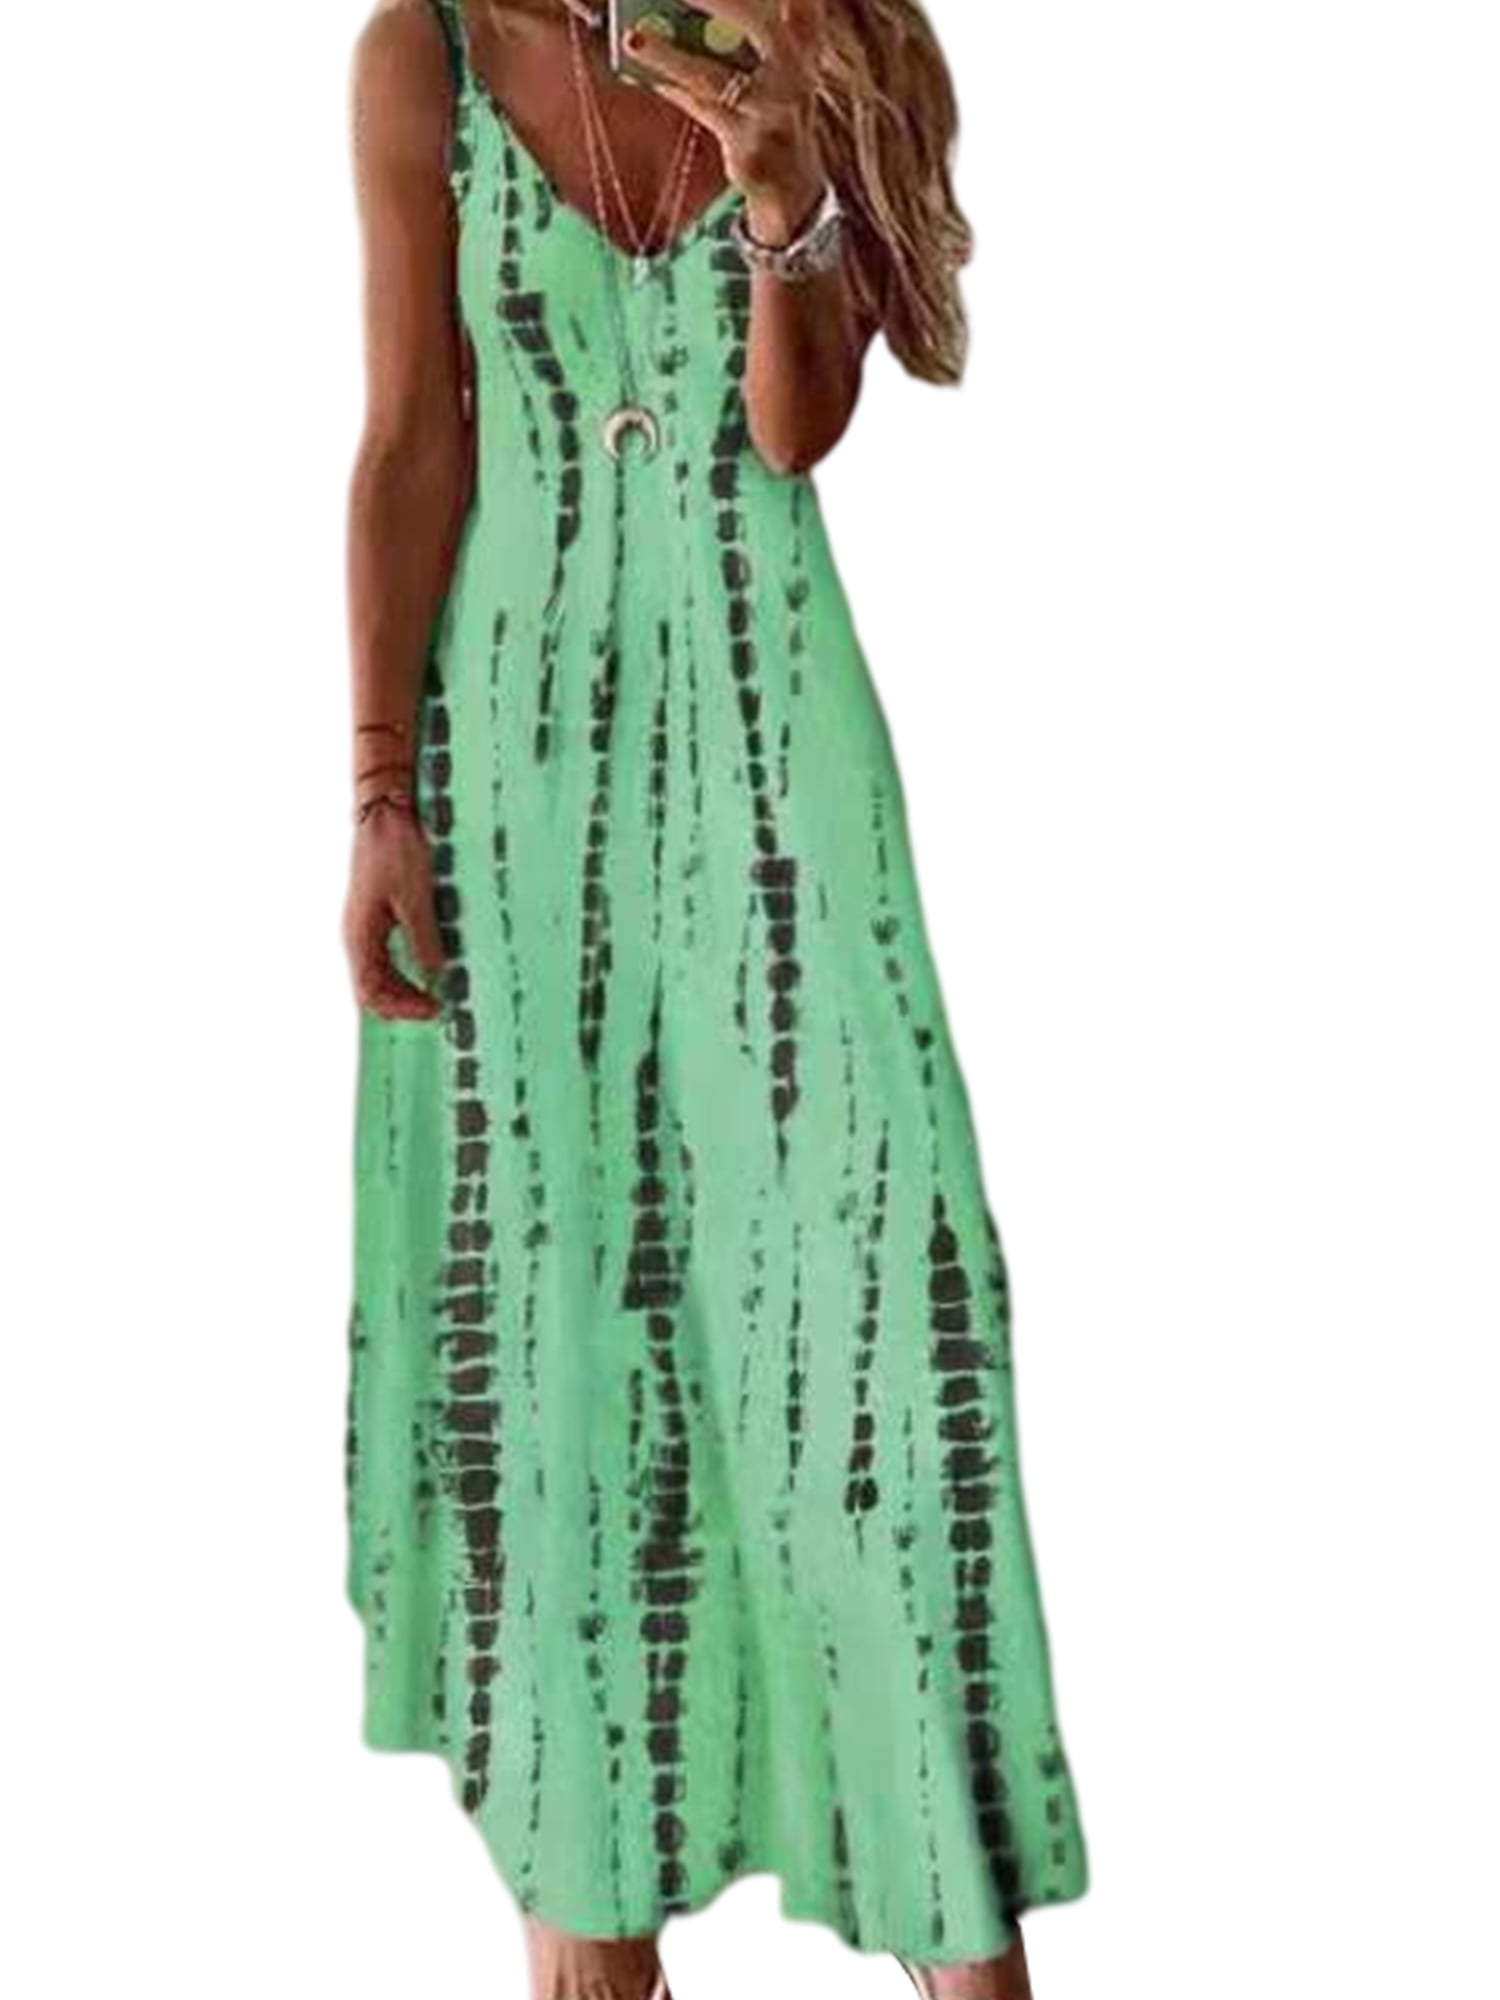 POTO Maxi Dress for Women Casual Summer Sleeveless Long Dress Tie Dye V-Neck Cami Dress Beach Tunic Tank Boho Sundress 